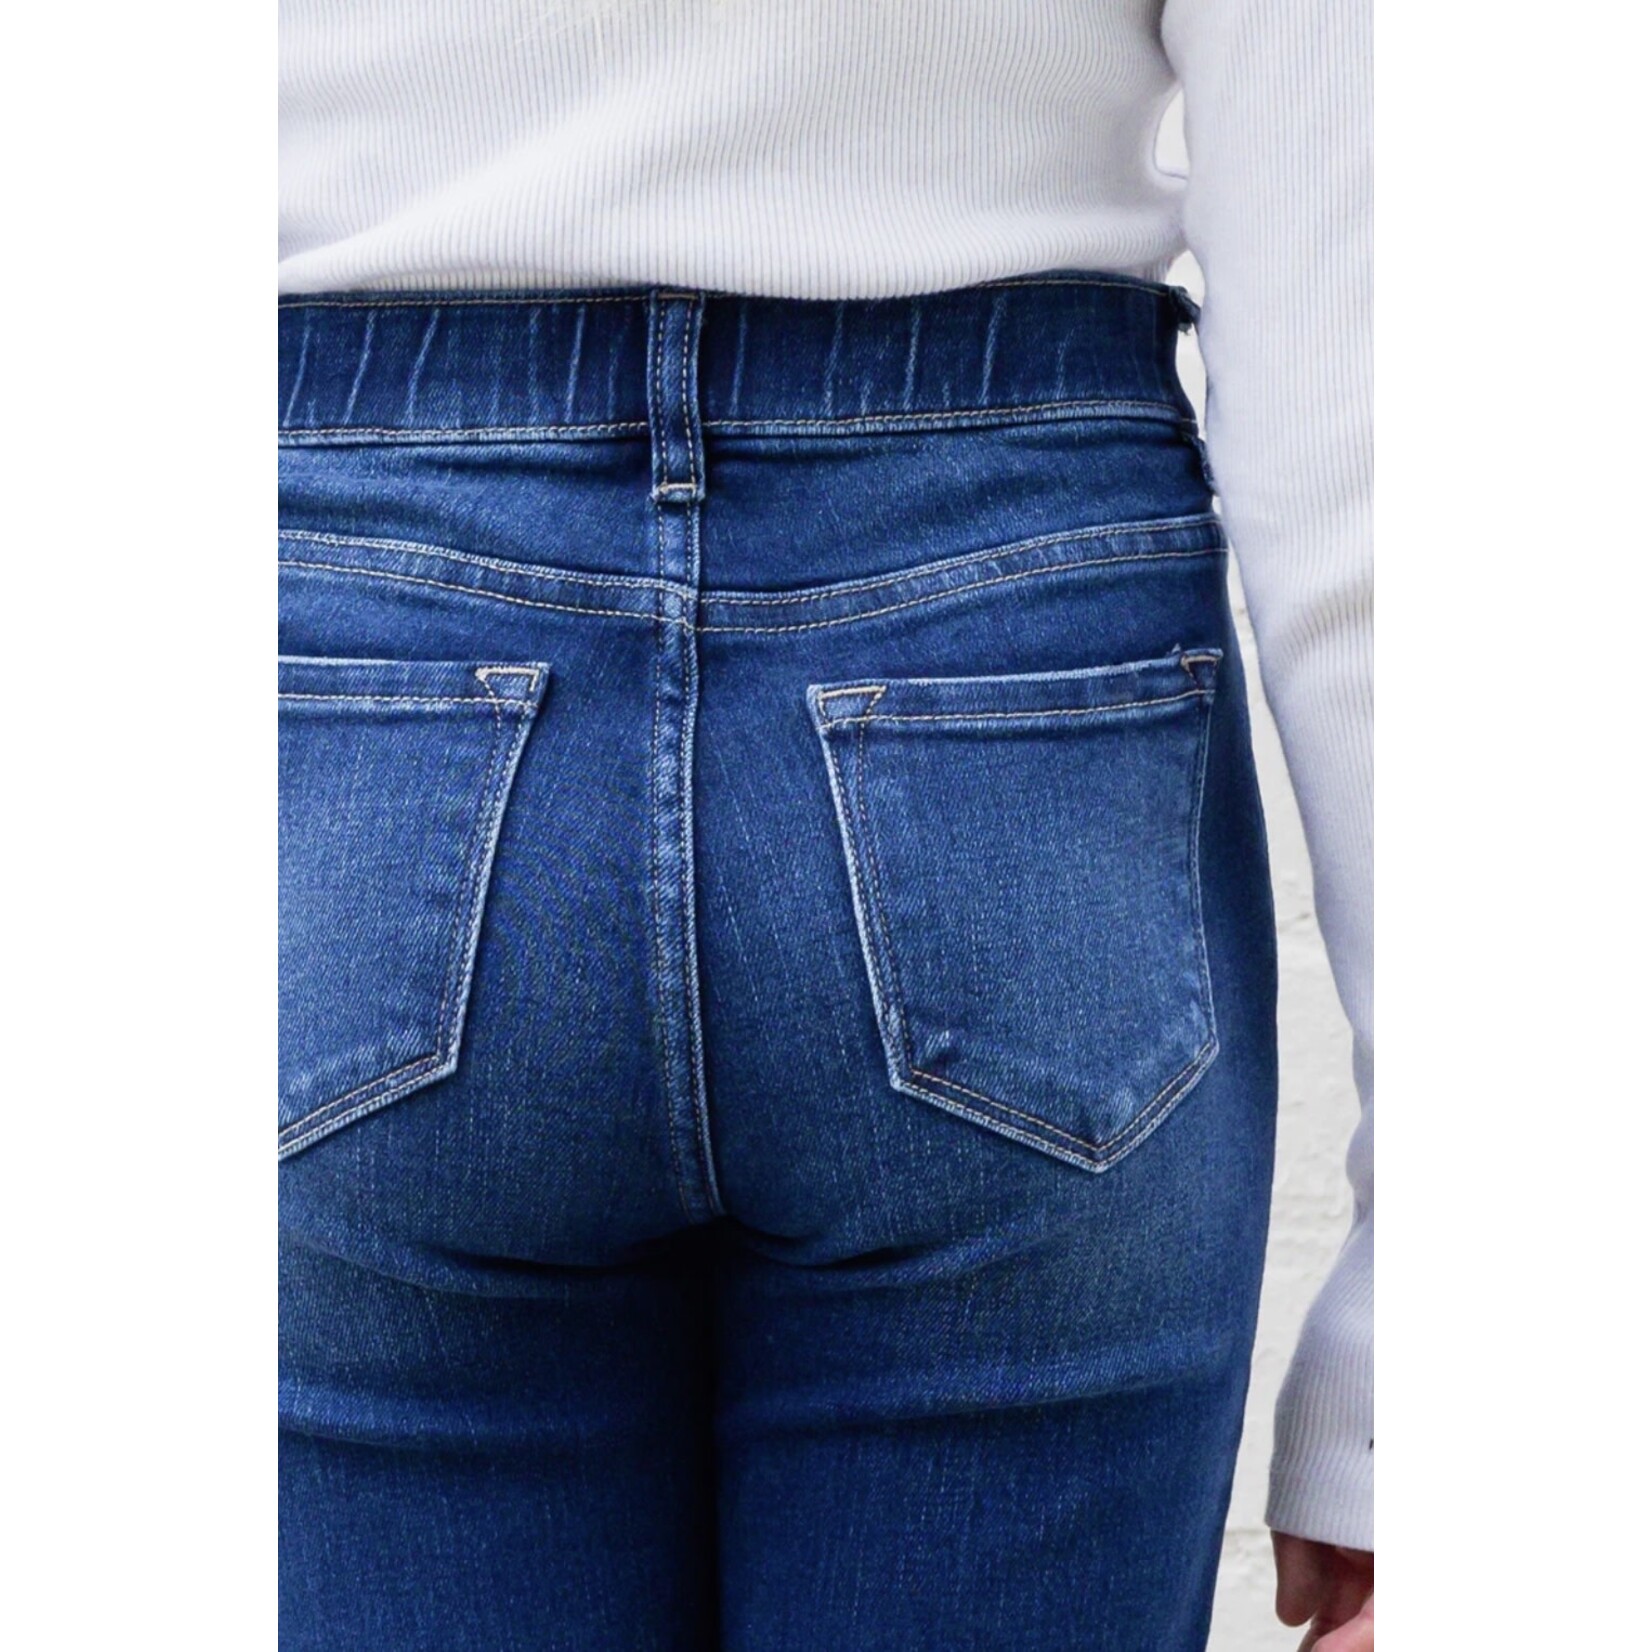 KanCan KanCan - Milly Cross Over Straight Jeans